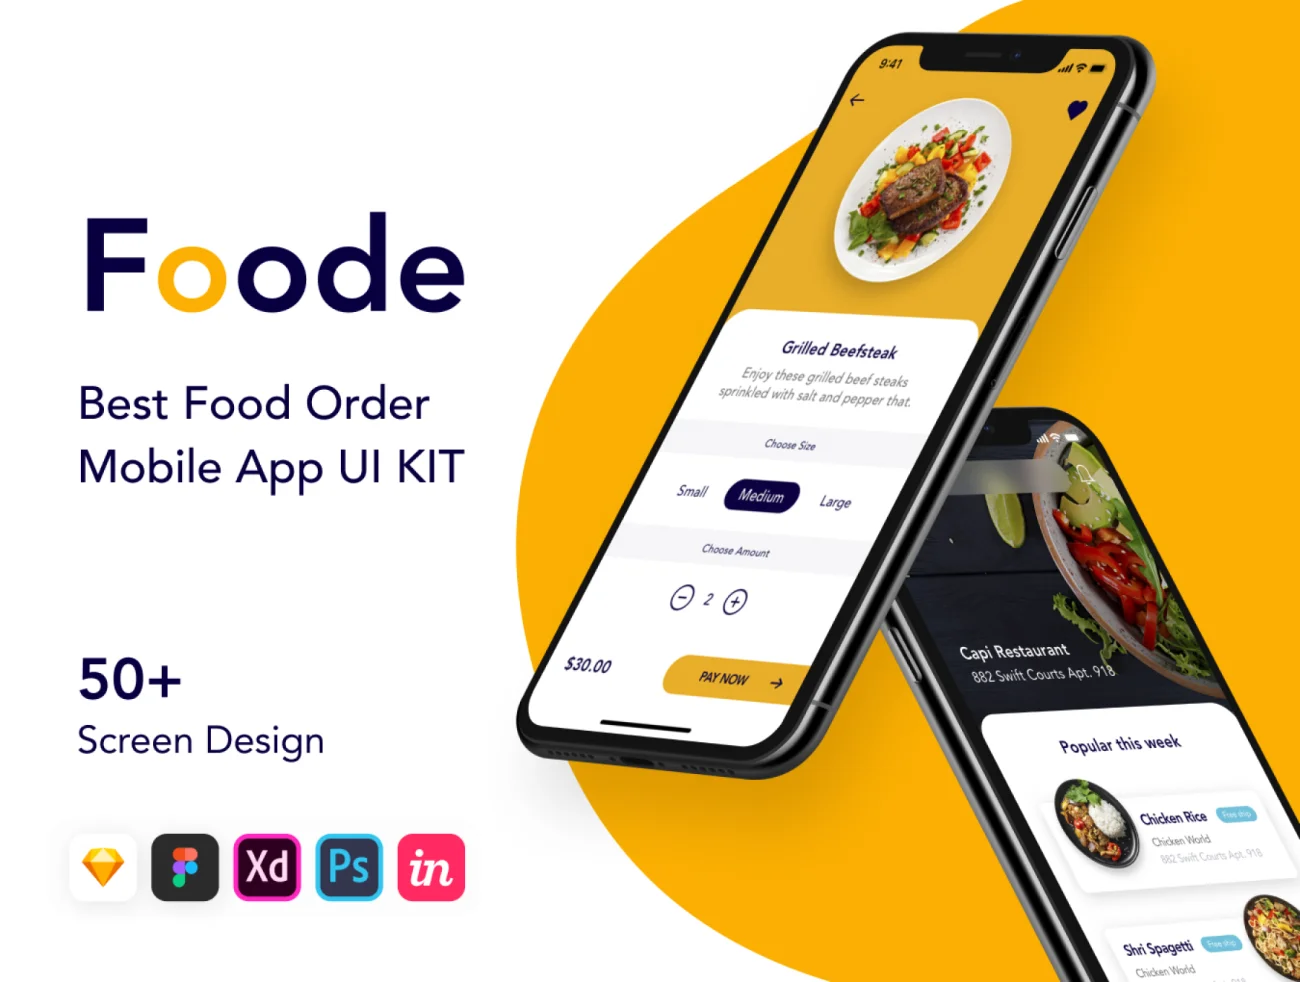 Foode - Best Food Order Mobile App 外卖点餐食品订单应用界面设计-UI/UX、ui套件、主页、介绍、付款、列表、卡片式、应用、引导页、支付、注册、登录页、着陆页、社交、网站、网购、表单、预订-到位啦UI